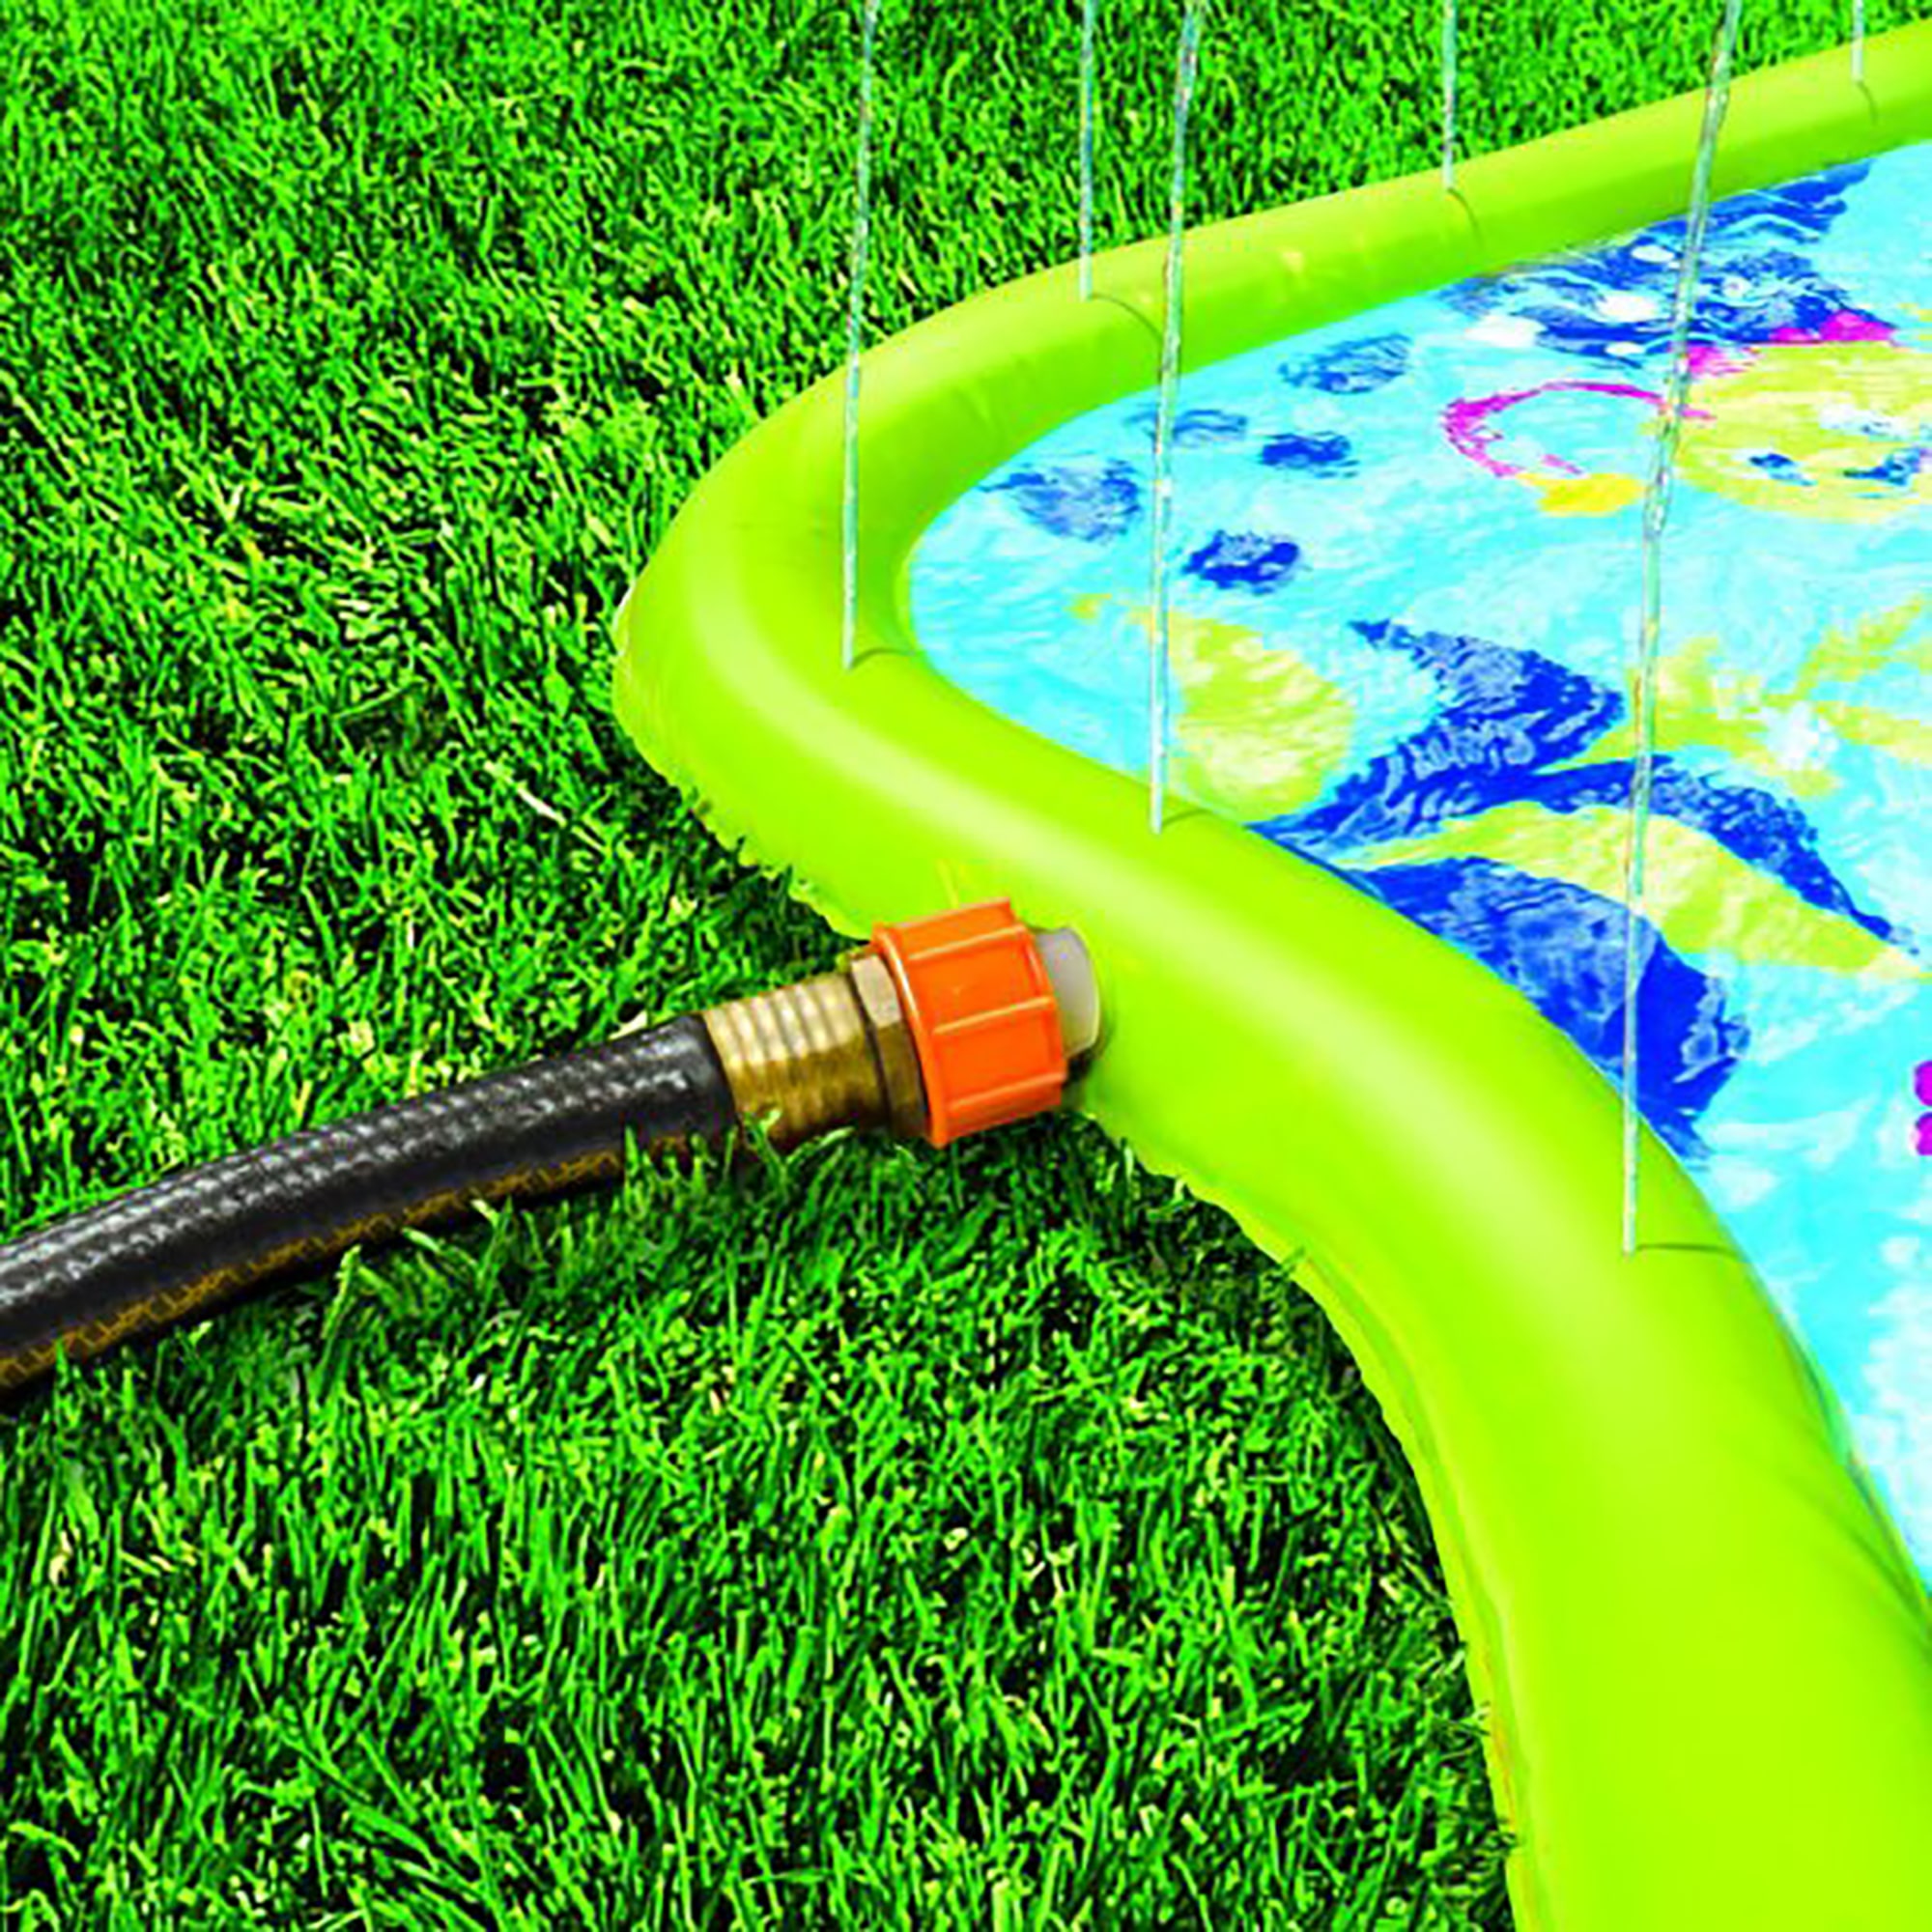 Banzai Splish Splash Water Park JR, Length: 90 in, Width: 52 in, Height: 24 in, Junior Inflatable Outdoor Backyard Water Splash Toy - image 5 of 5